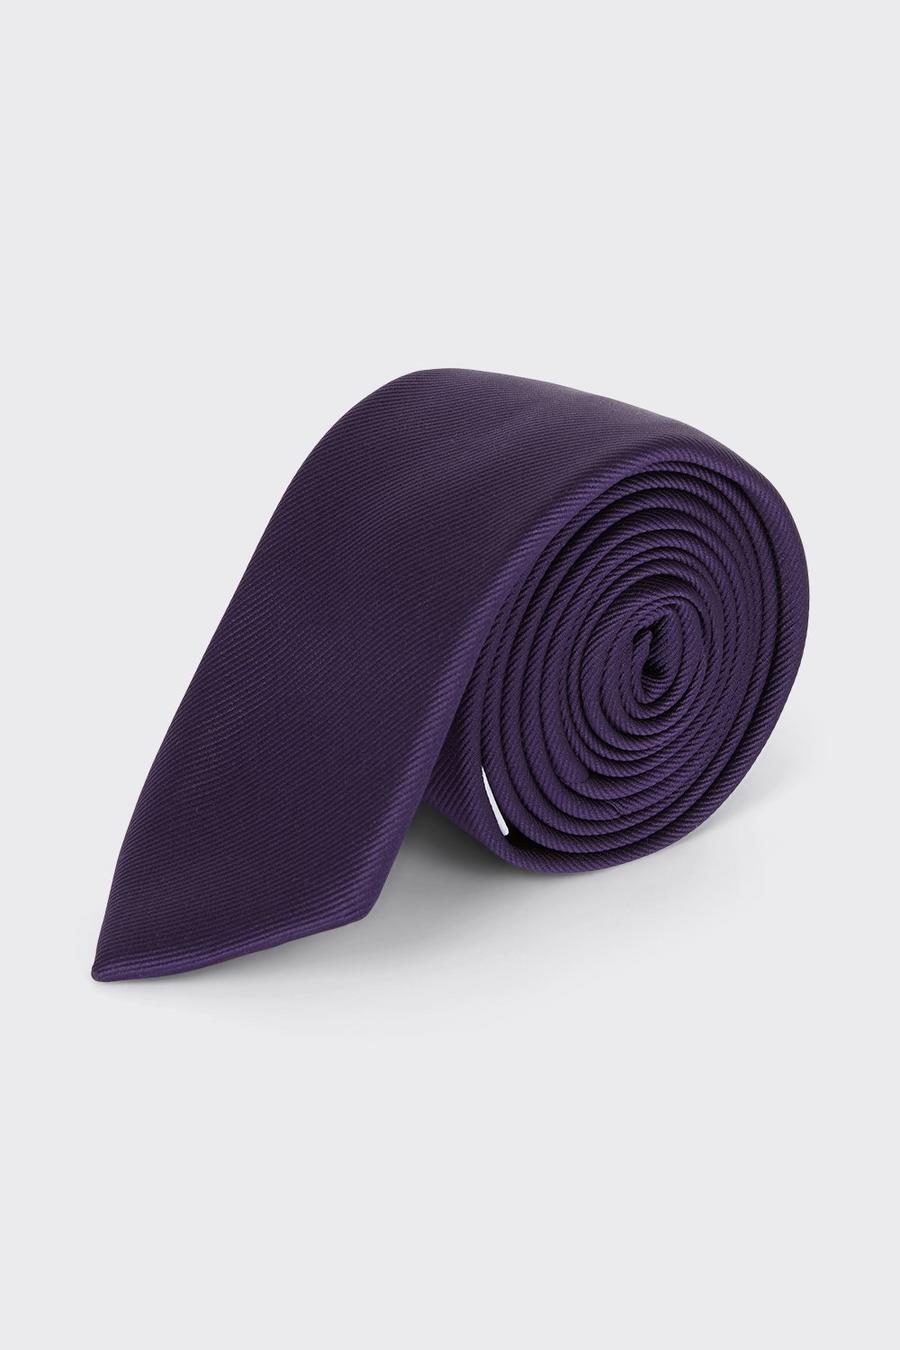 Slim Purple Tie